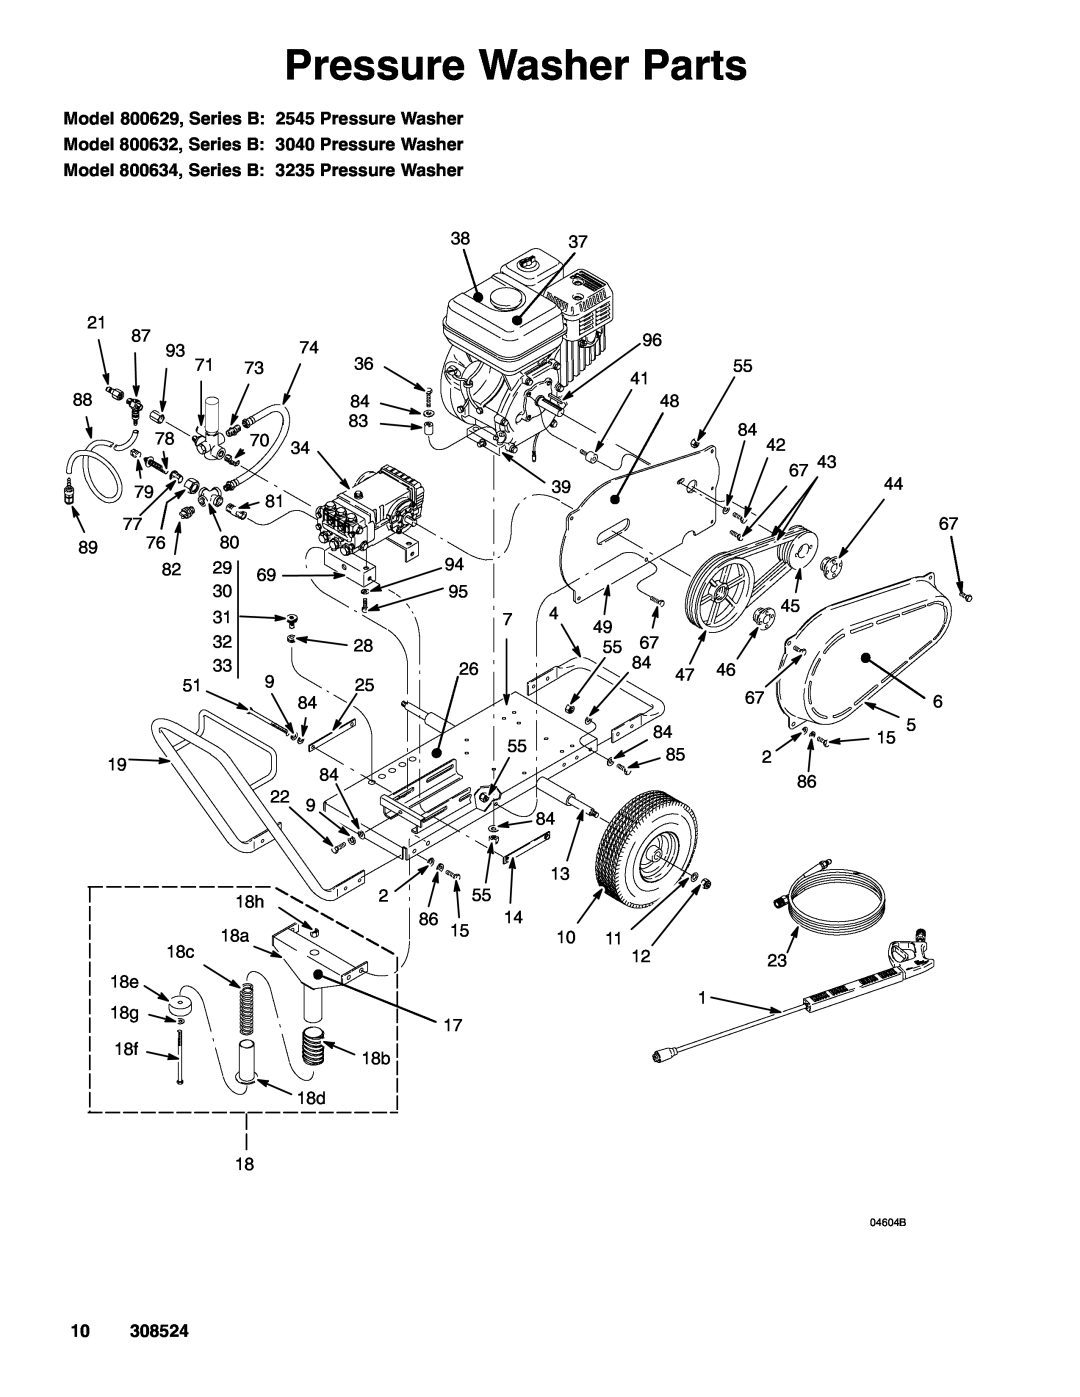 Graco Pressure Washer Parts, Model 800629, Series B 2545 Pressure Washer, Model 800632, Series B 3040 Pressure Washer 